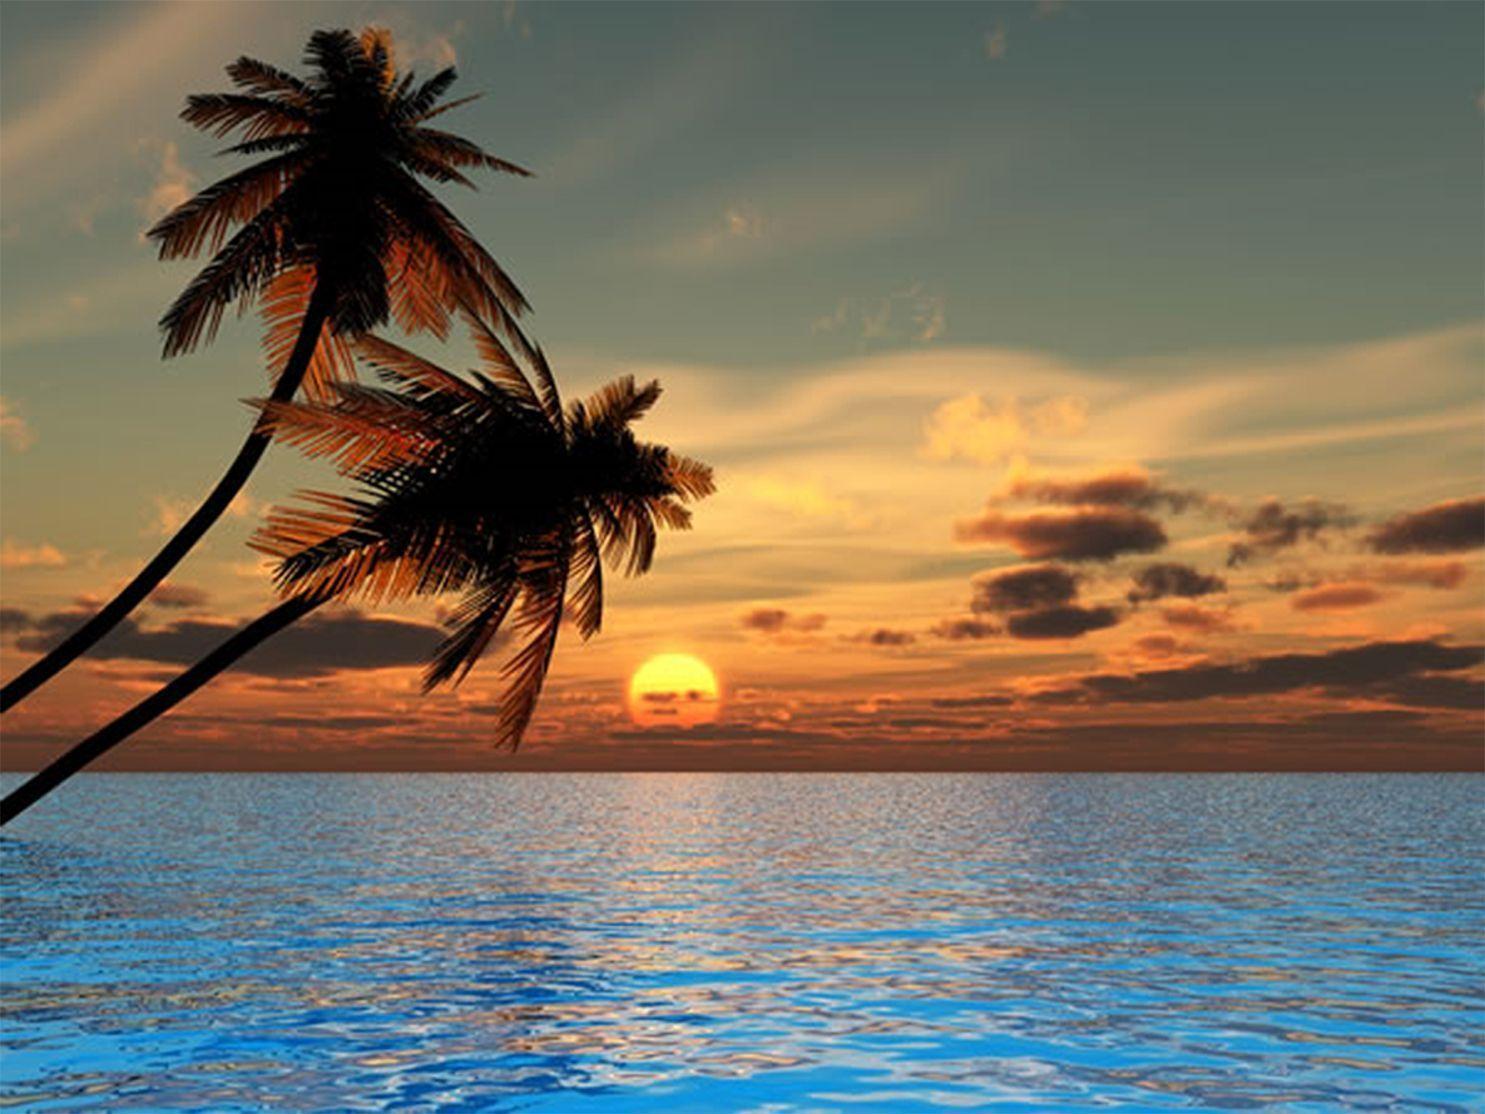 Sunset Beach Image Wallpapers Desktop Backgrounds Free